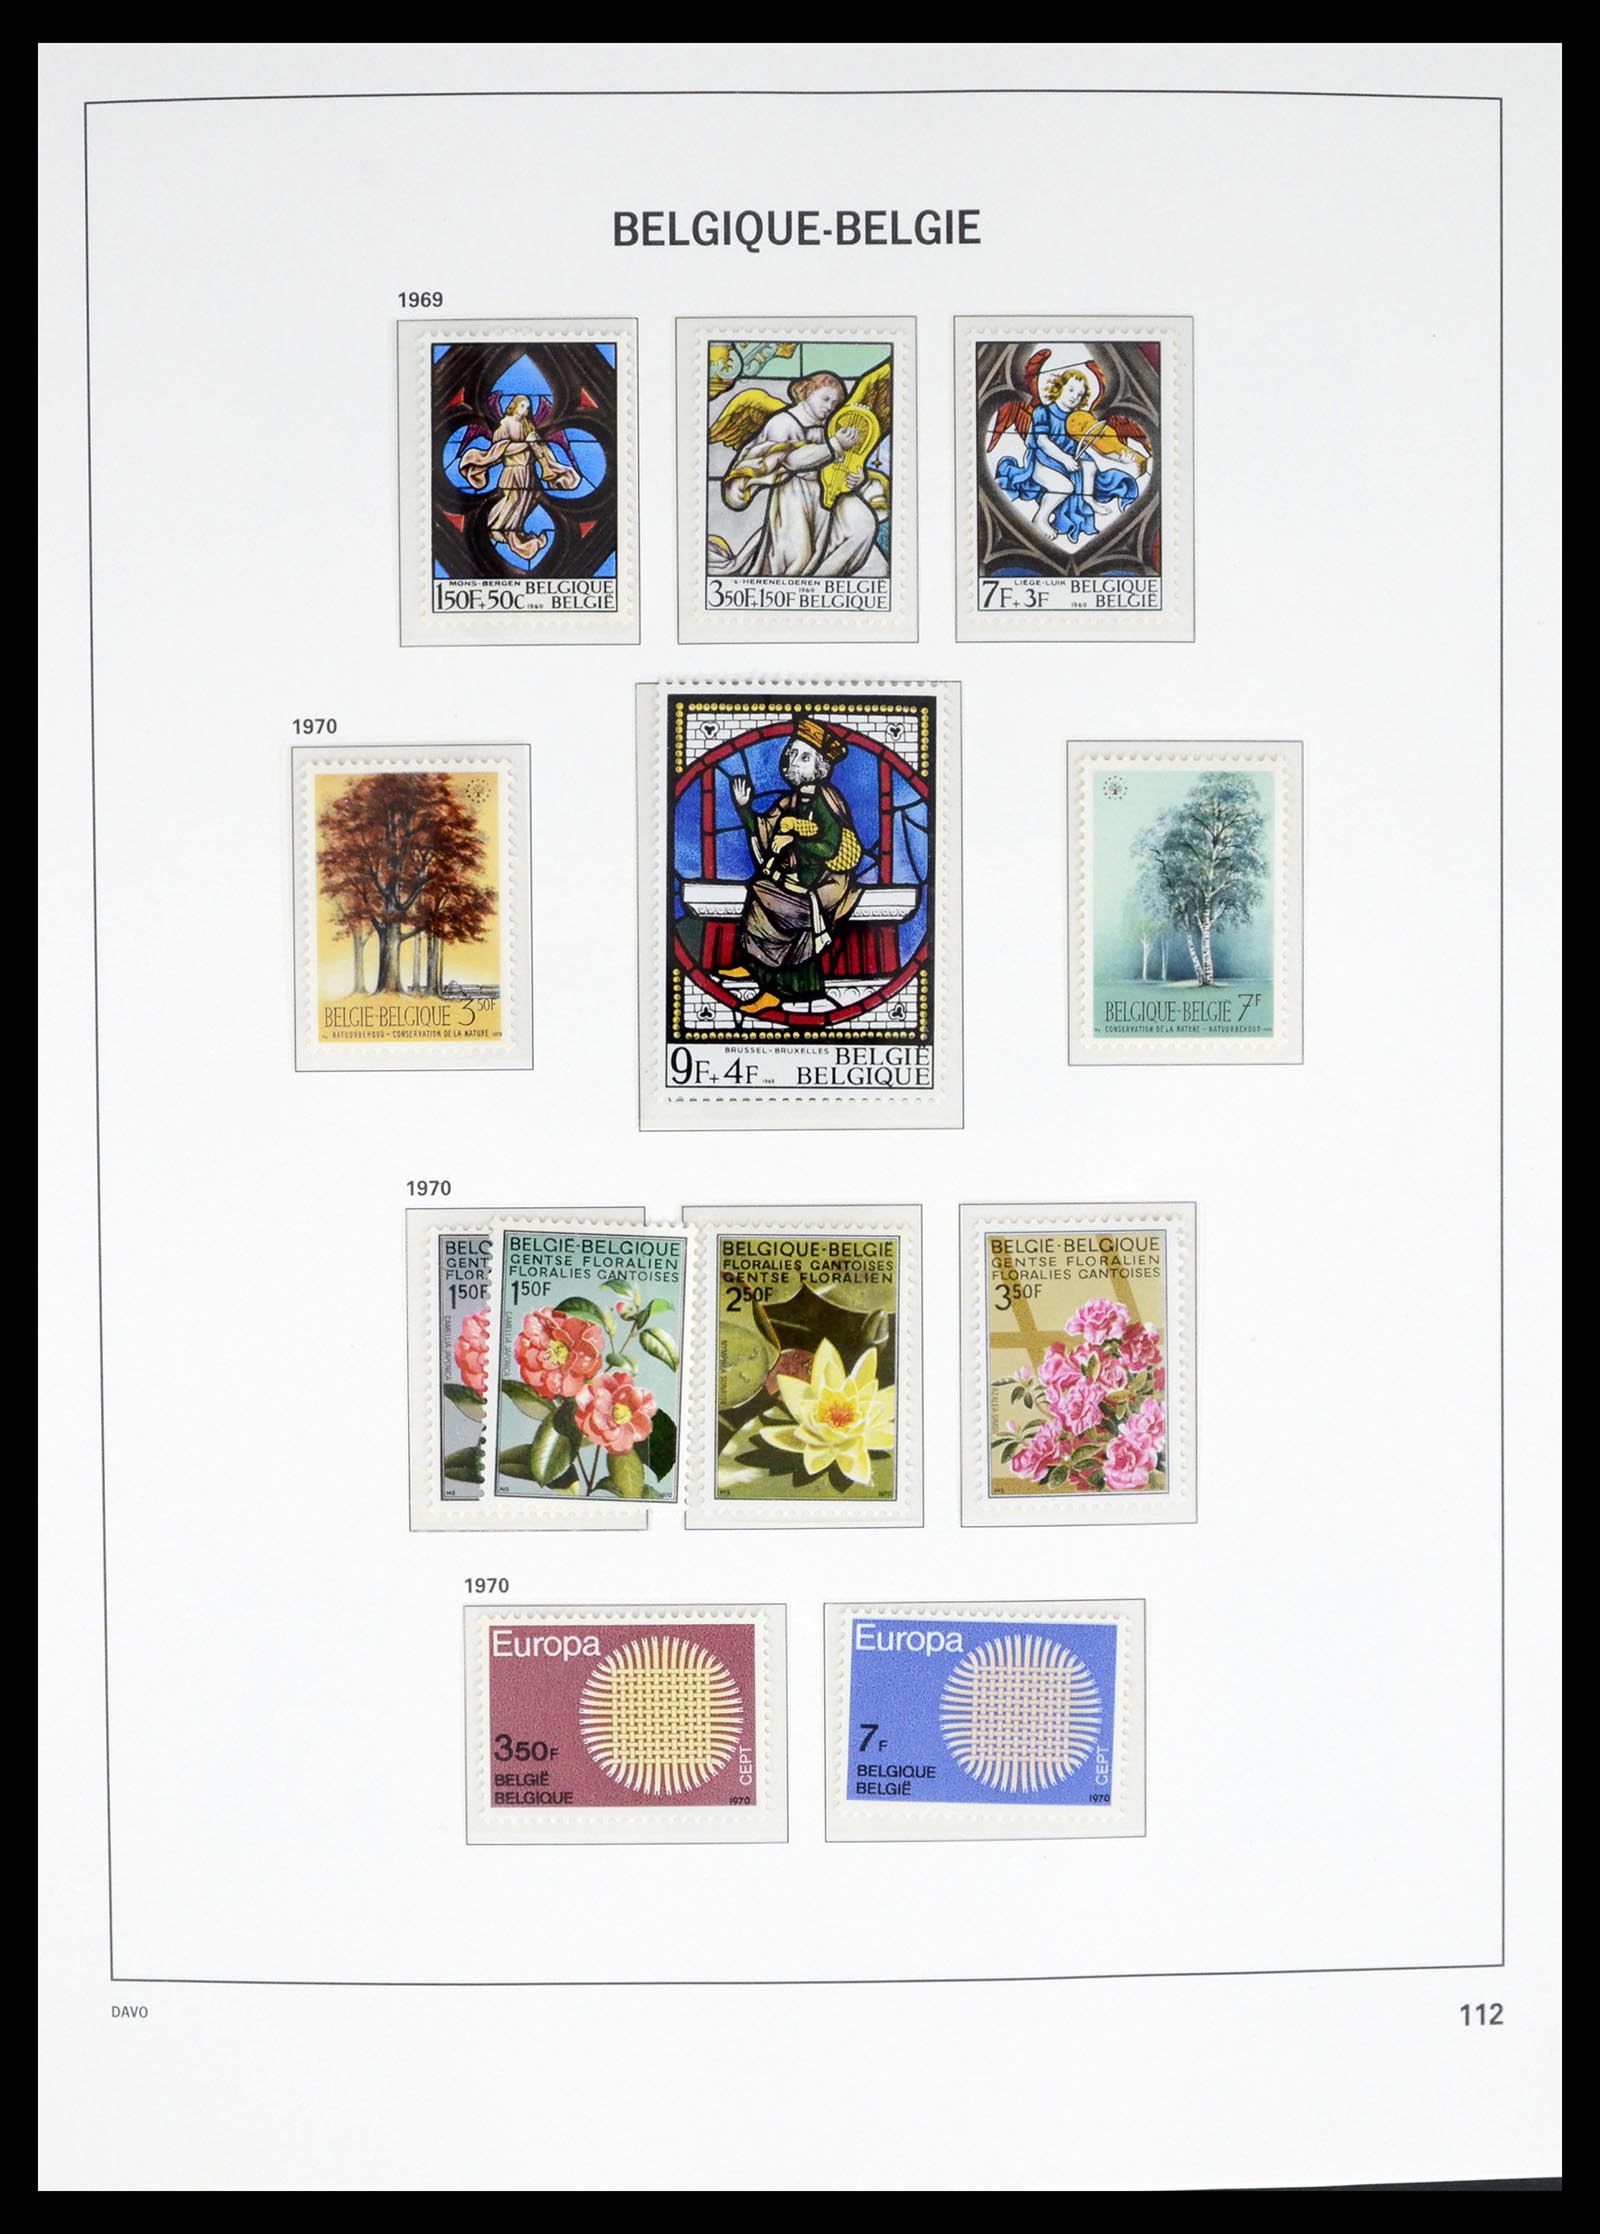 37368 001 - Stamp collection 37368 Belgium 1969-2003.